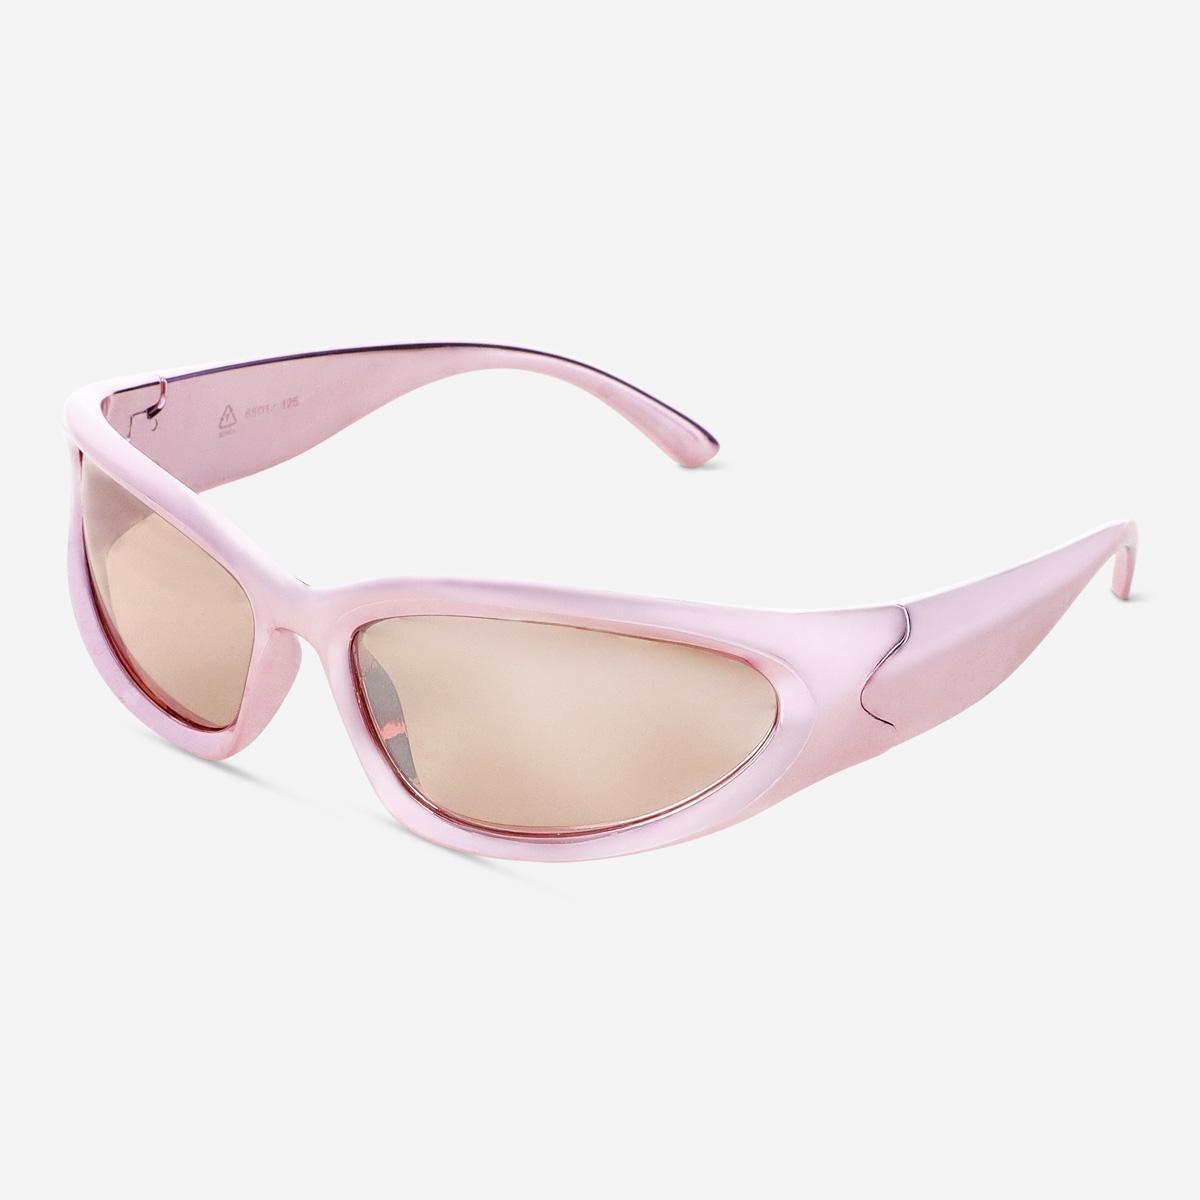 Metallic pink sunglasses